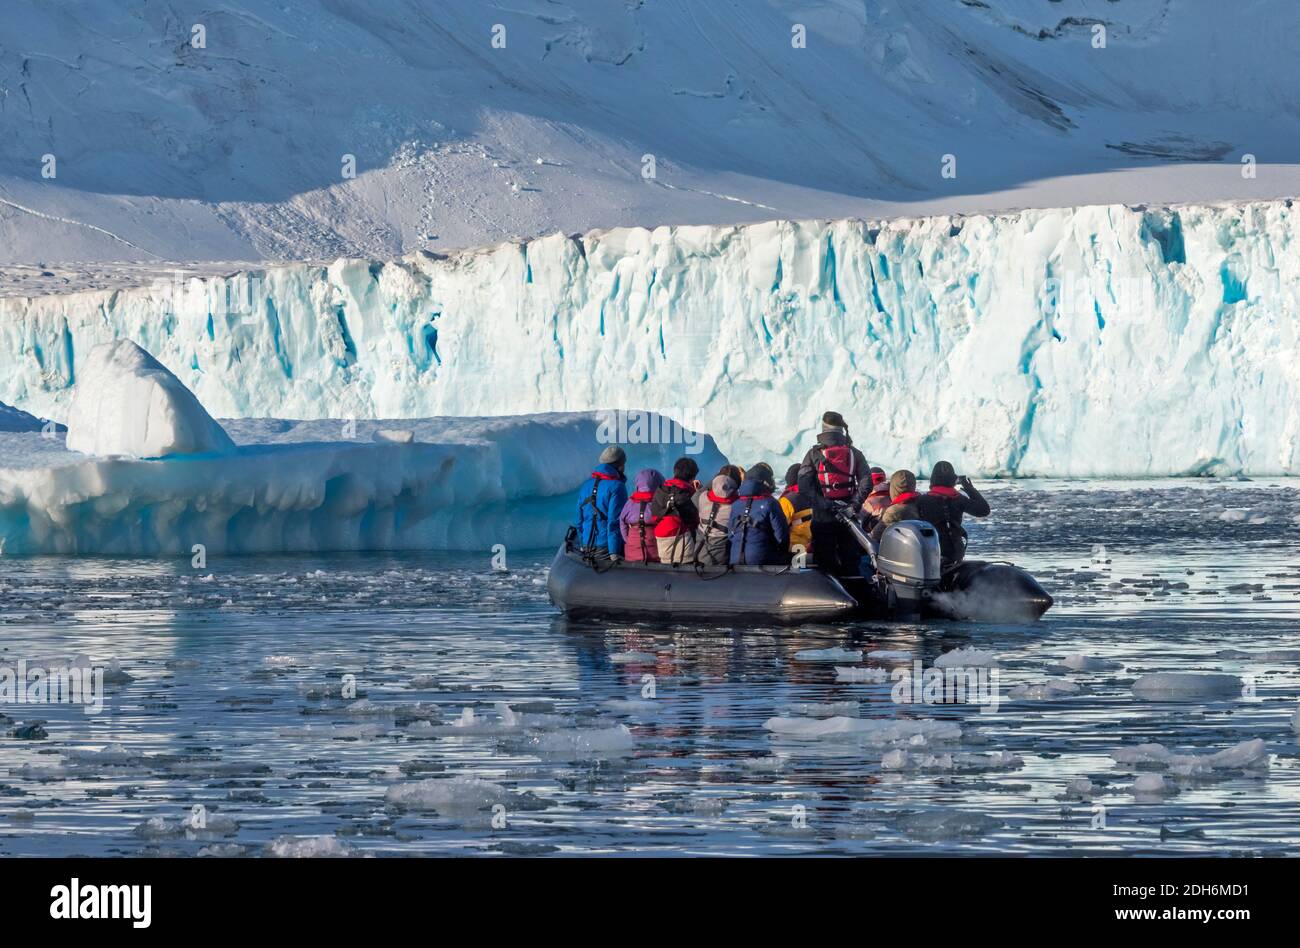 Zodiac si avvicina enorme ghiacciaio nell'Oceano Atlantico del Sud, Paradise Bay, Antartide Foto Stock